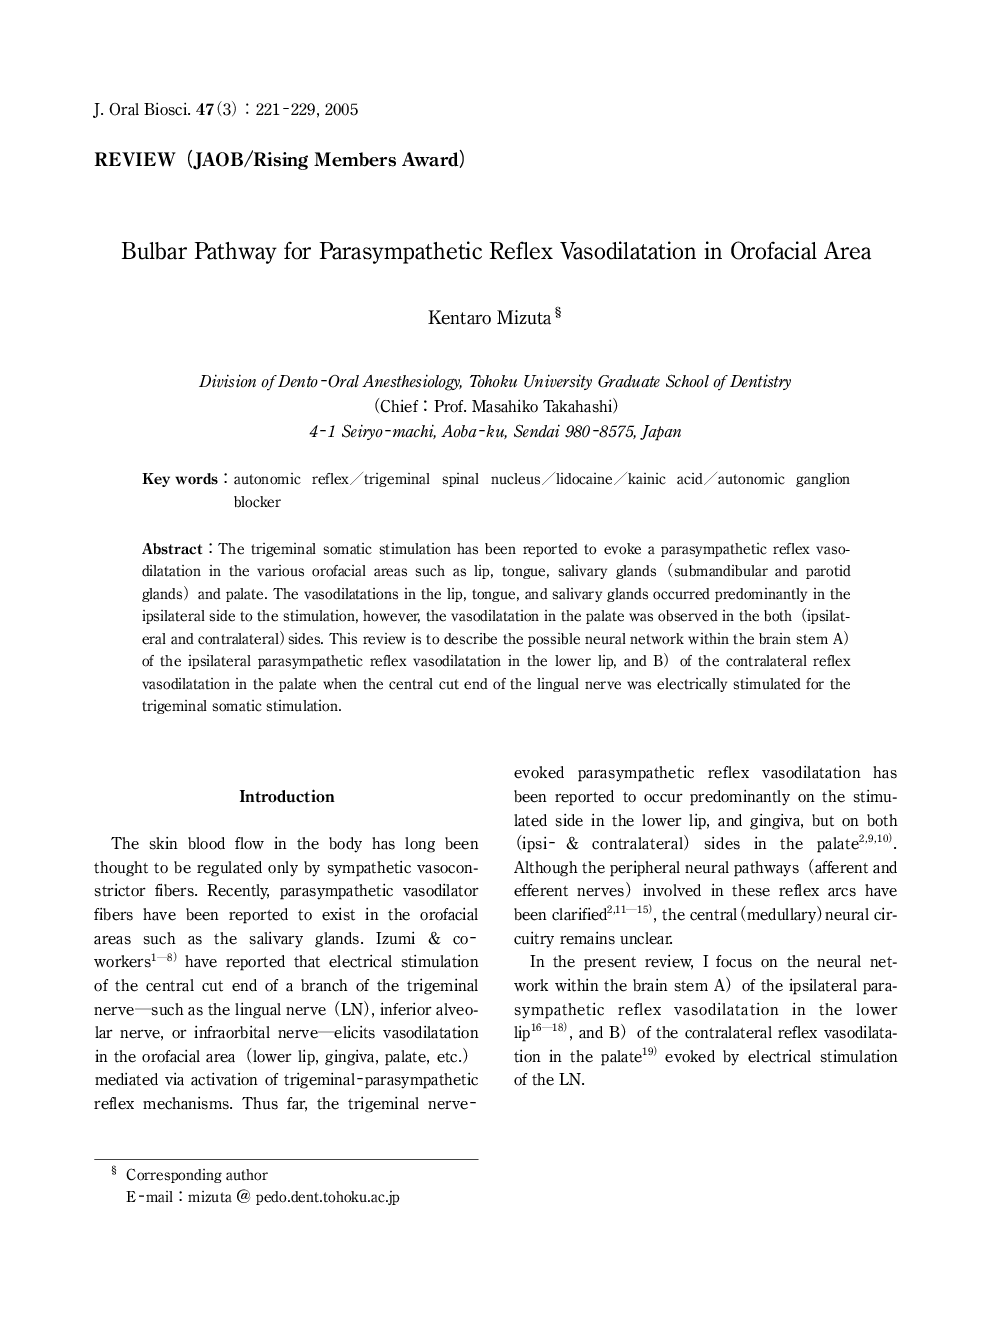 Bulbar Pathway for Parasympathetic Reflex Vasodilatation in Orofacial Area